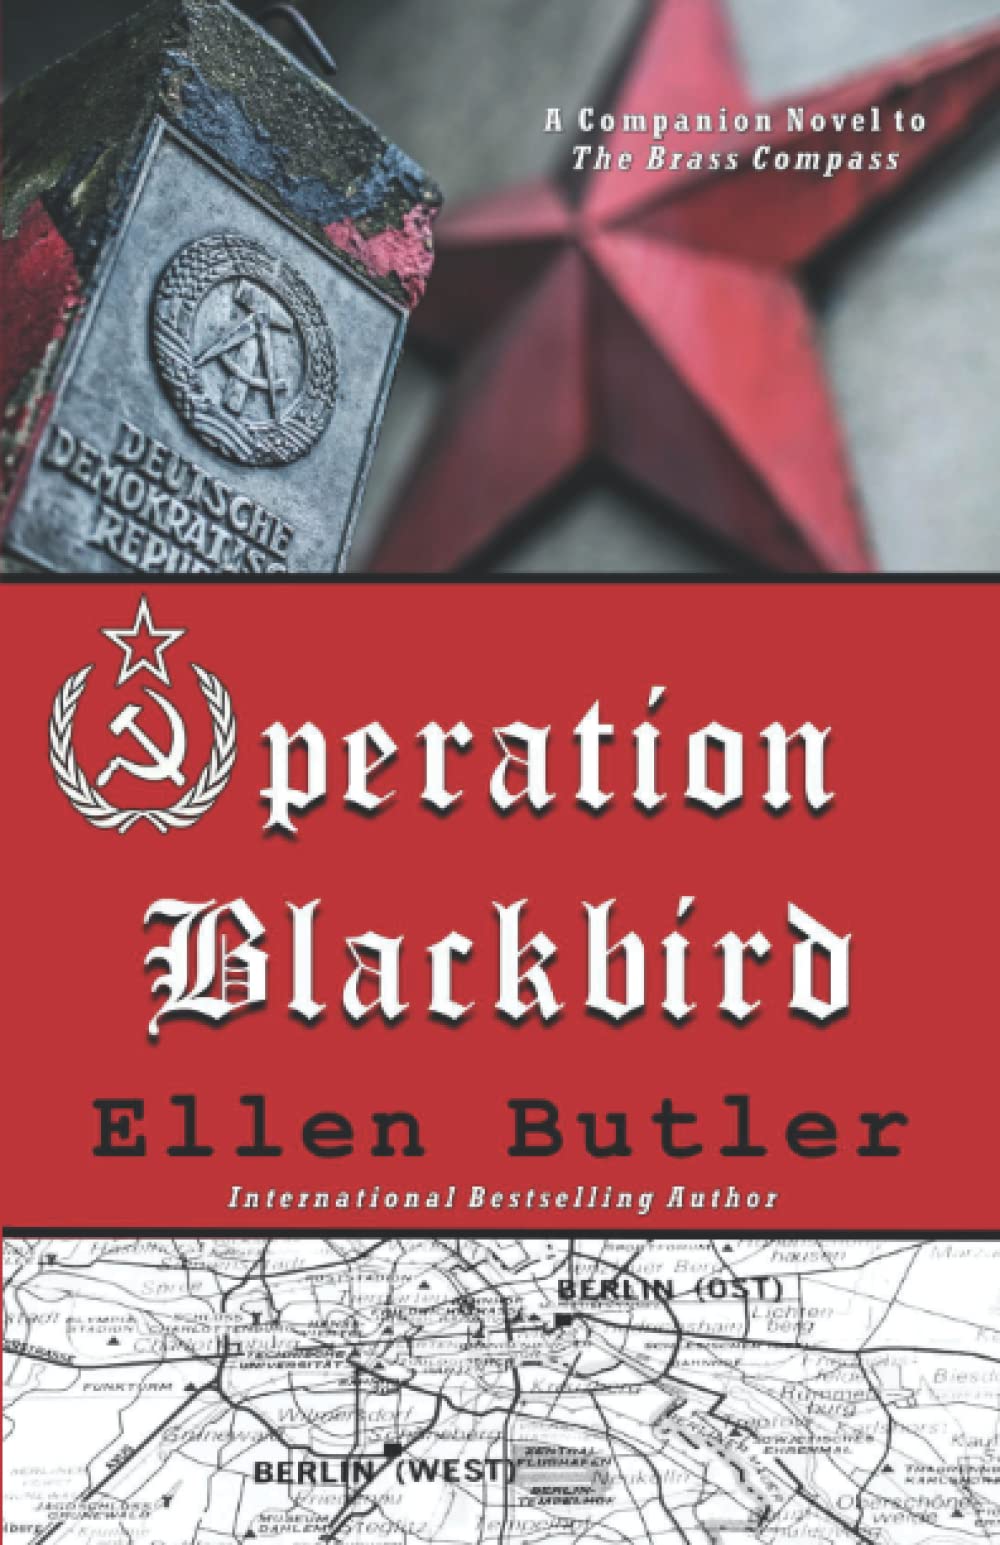 Operation Blackbird